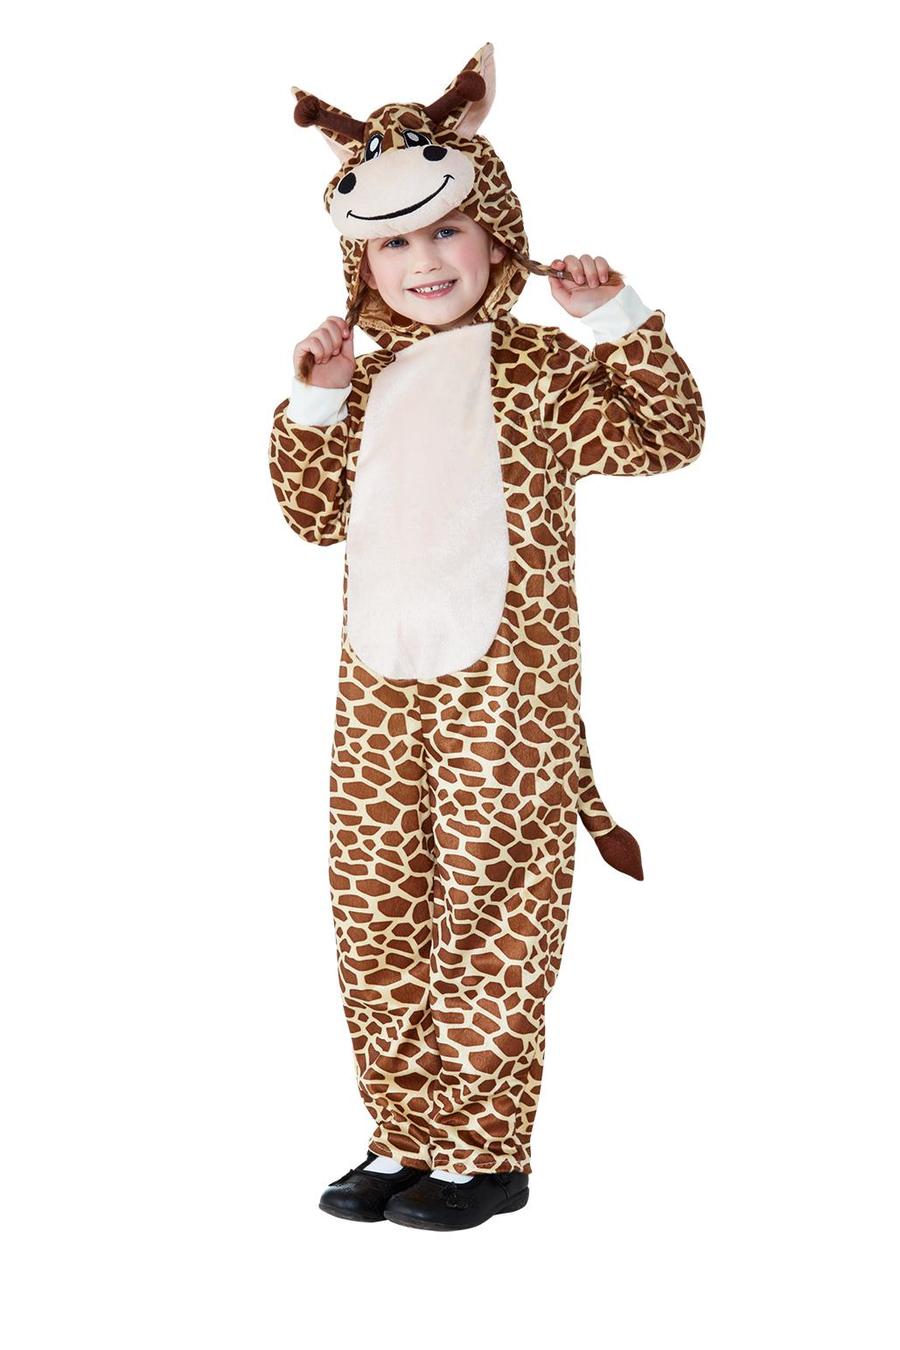 Toddler Giraffe Costume Wholesale